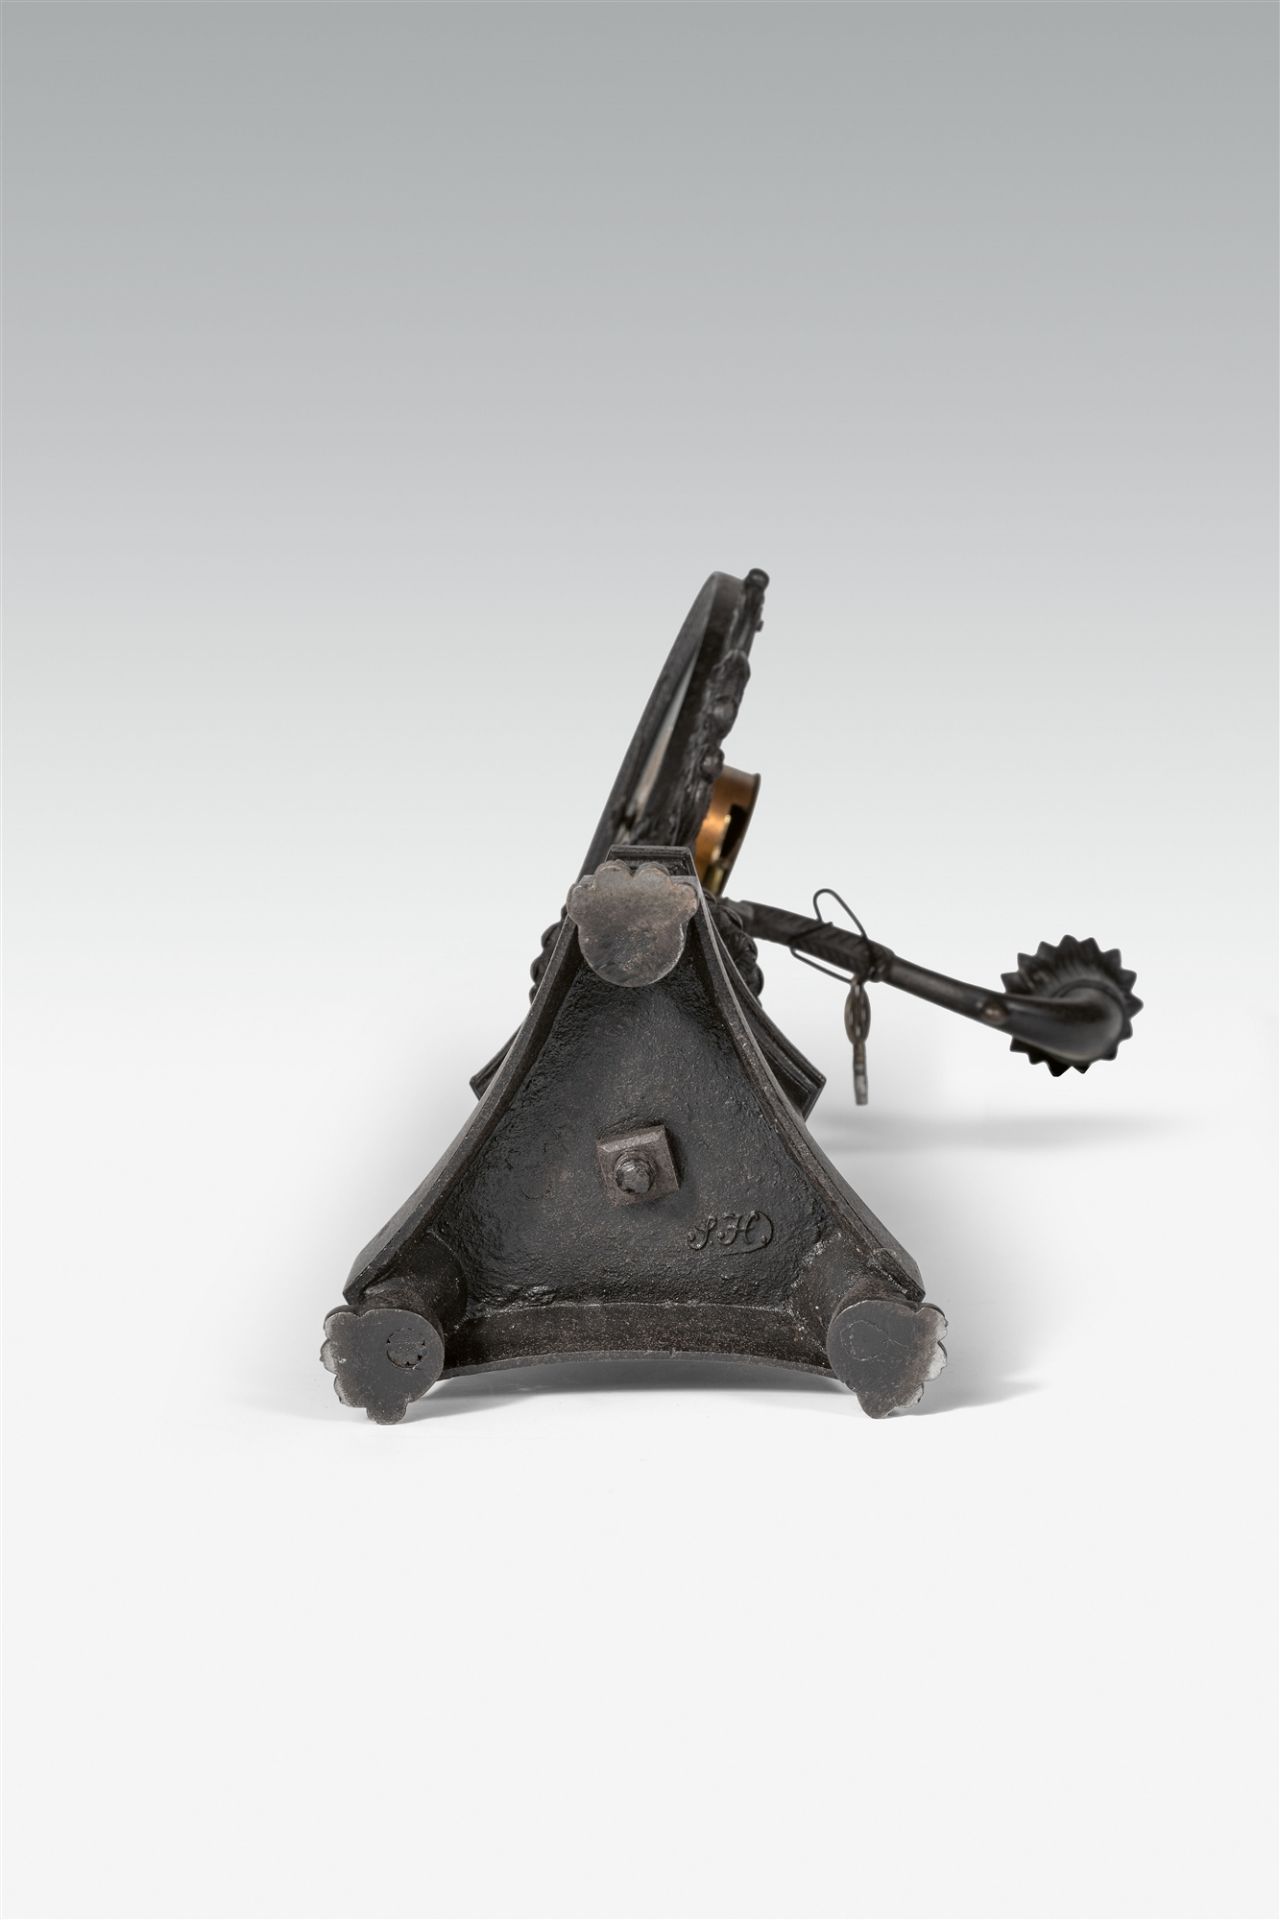 A cast iron night clock "Trespied" - Image 3 of 3